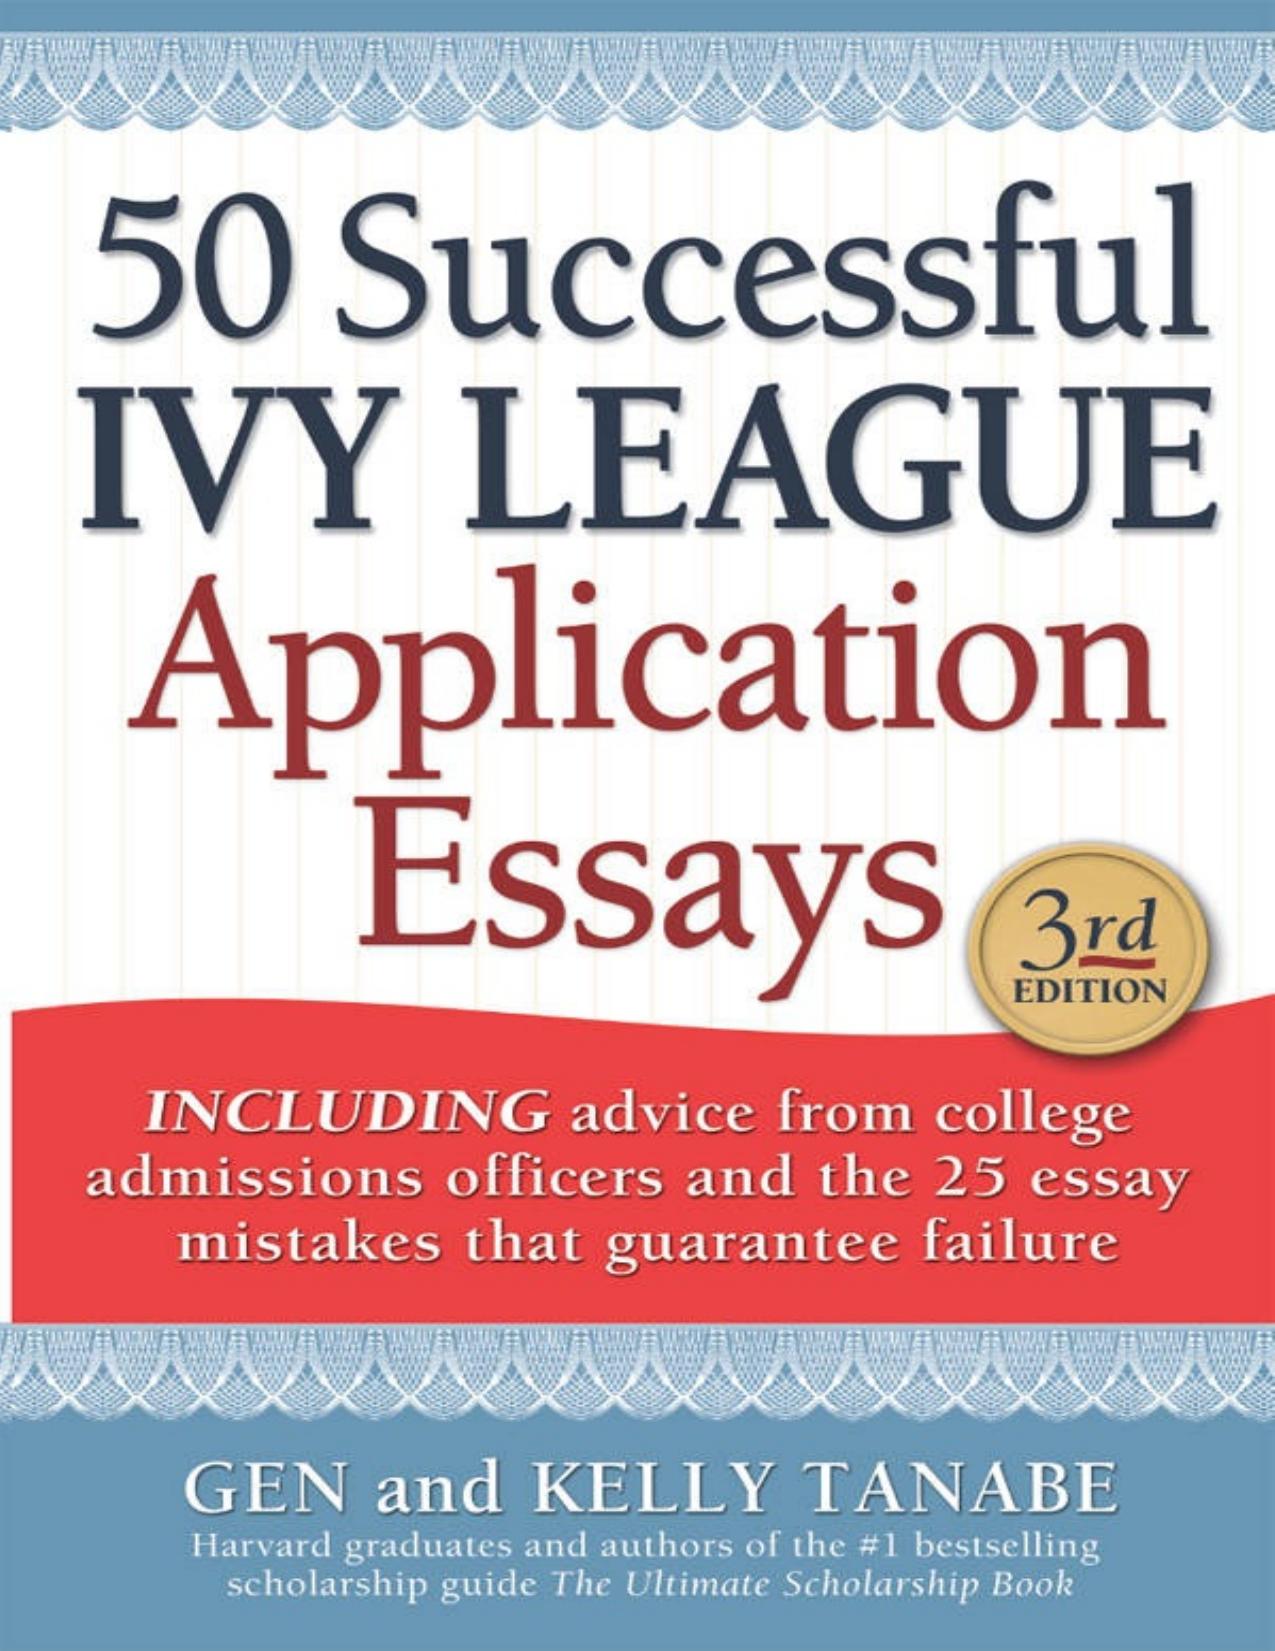 50 Successful Ivy League Application Essays.jpg